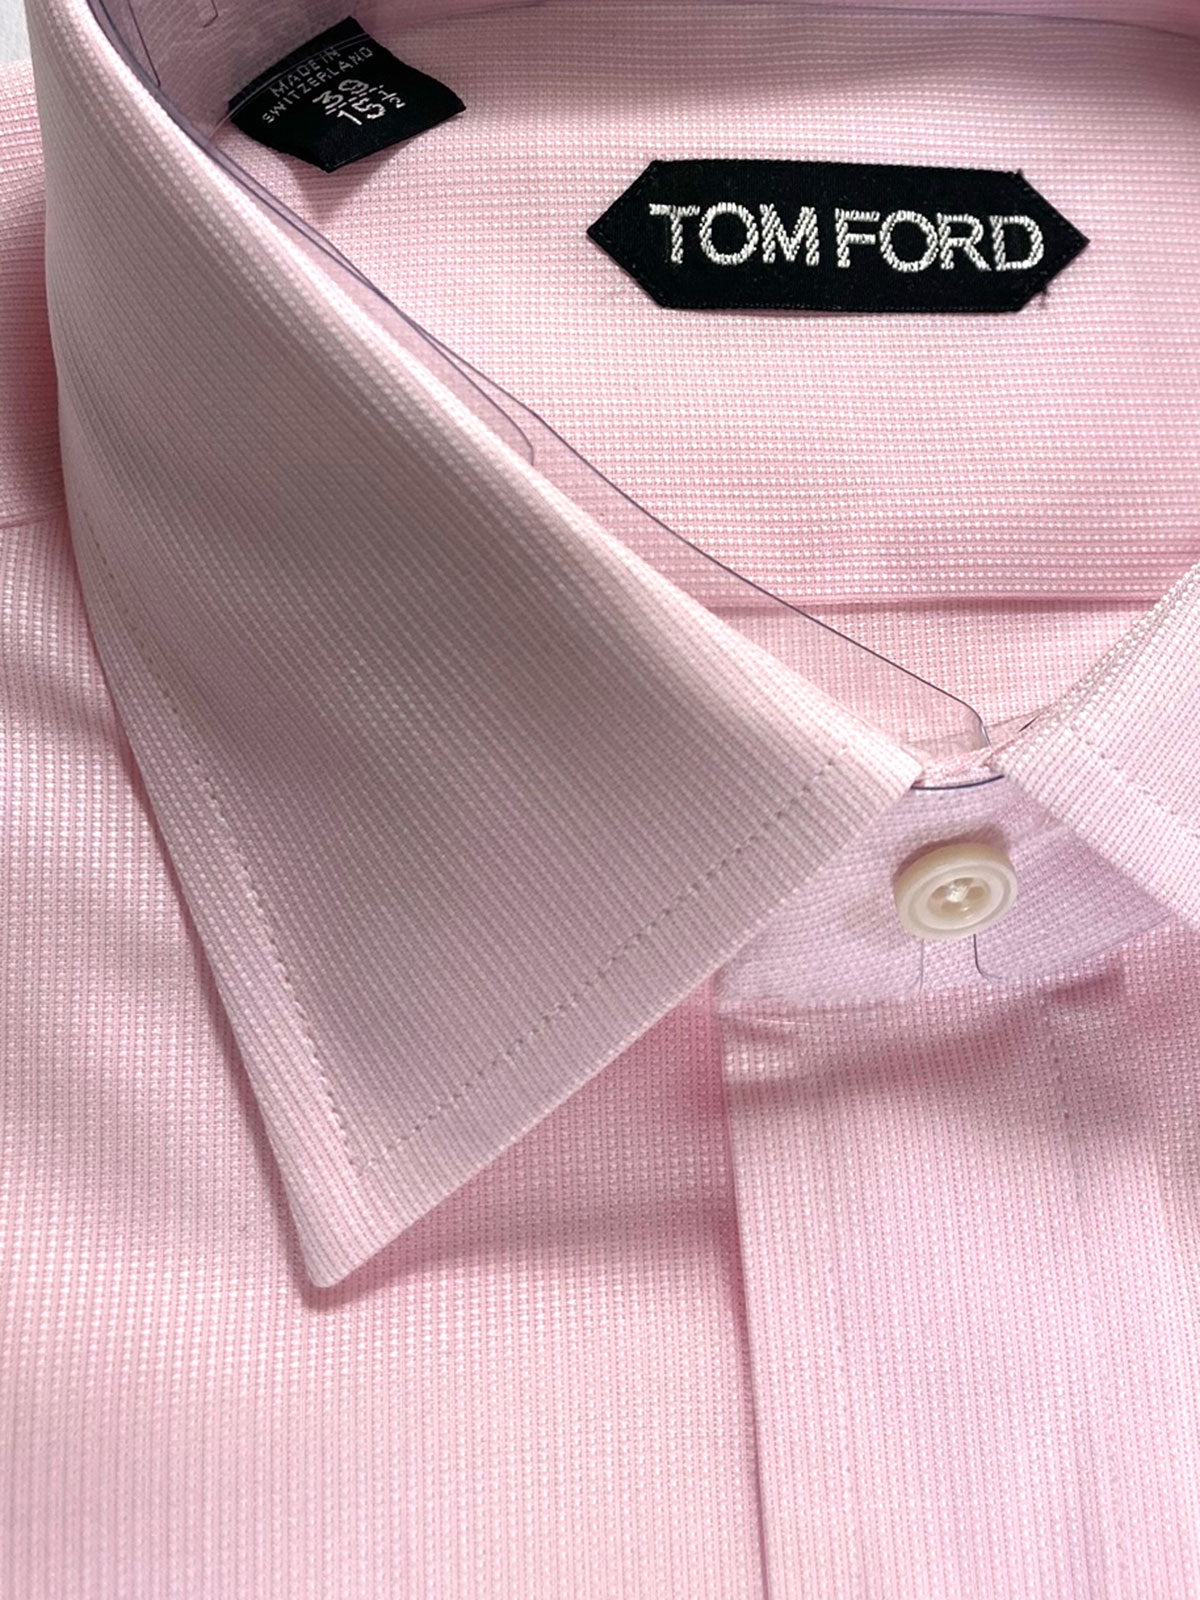 Tom Ford Dress Shirt Pink Modern Fit 39 - 15 1/2 -